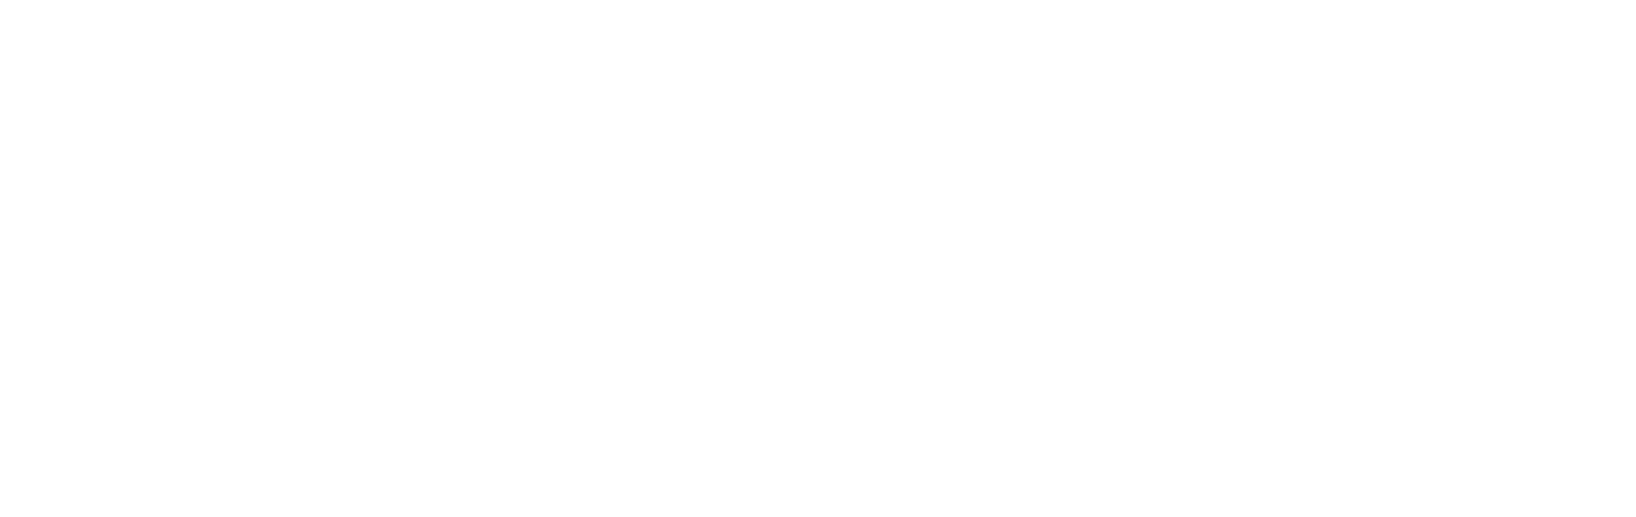 Zeta Global logo grand pour les fonds sombres (PNG transparent)